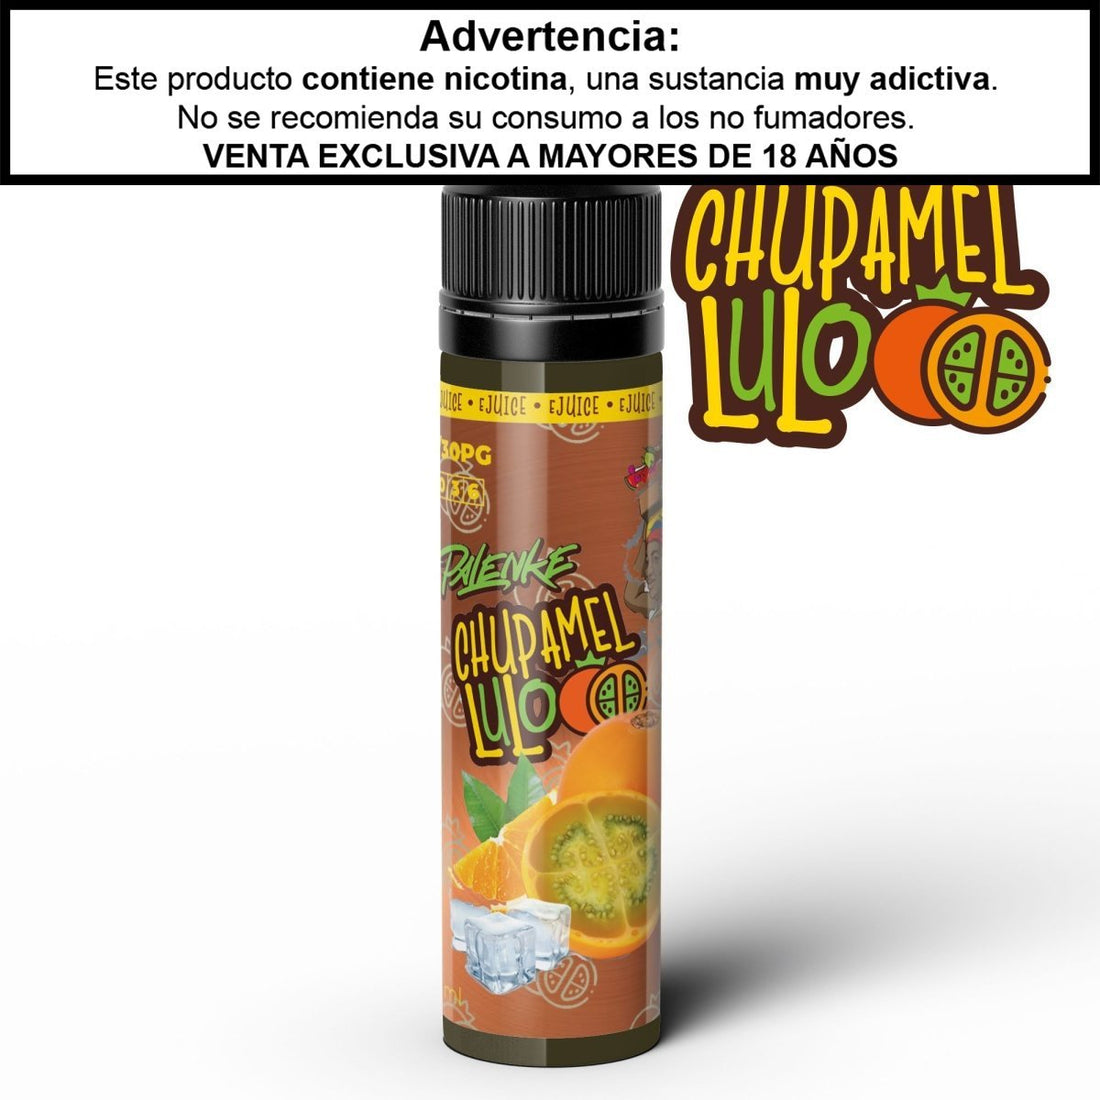 Chupamel Lulo - Eliquid - Palenke Ejuice | BL-PLK-CHL-00